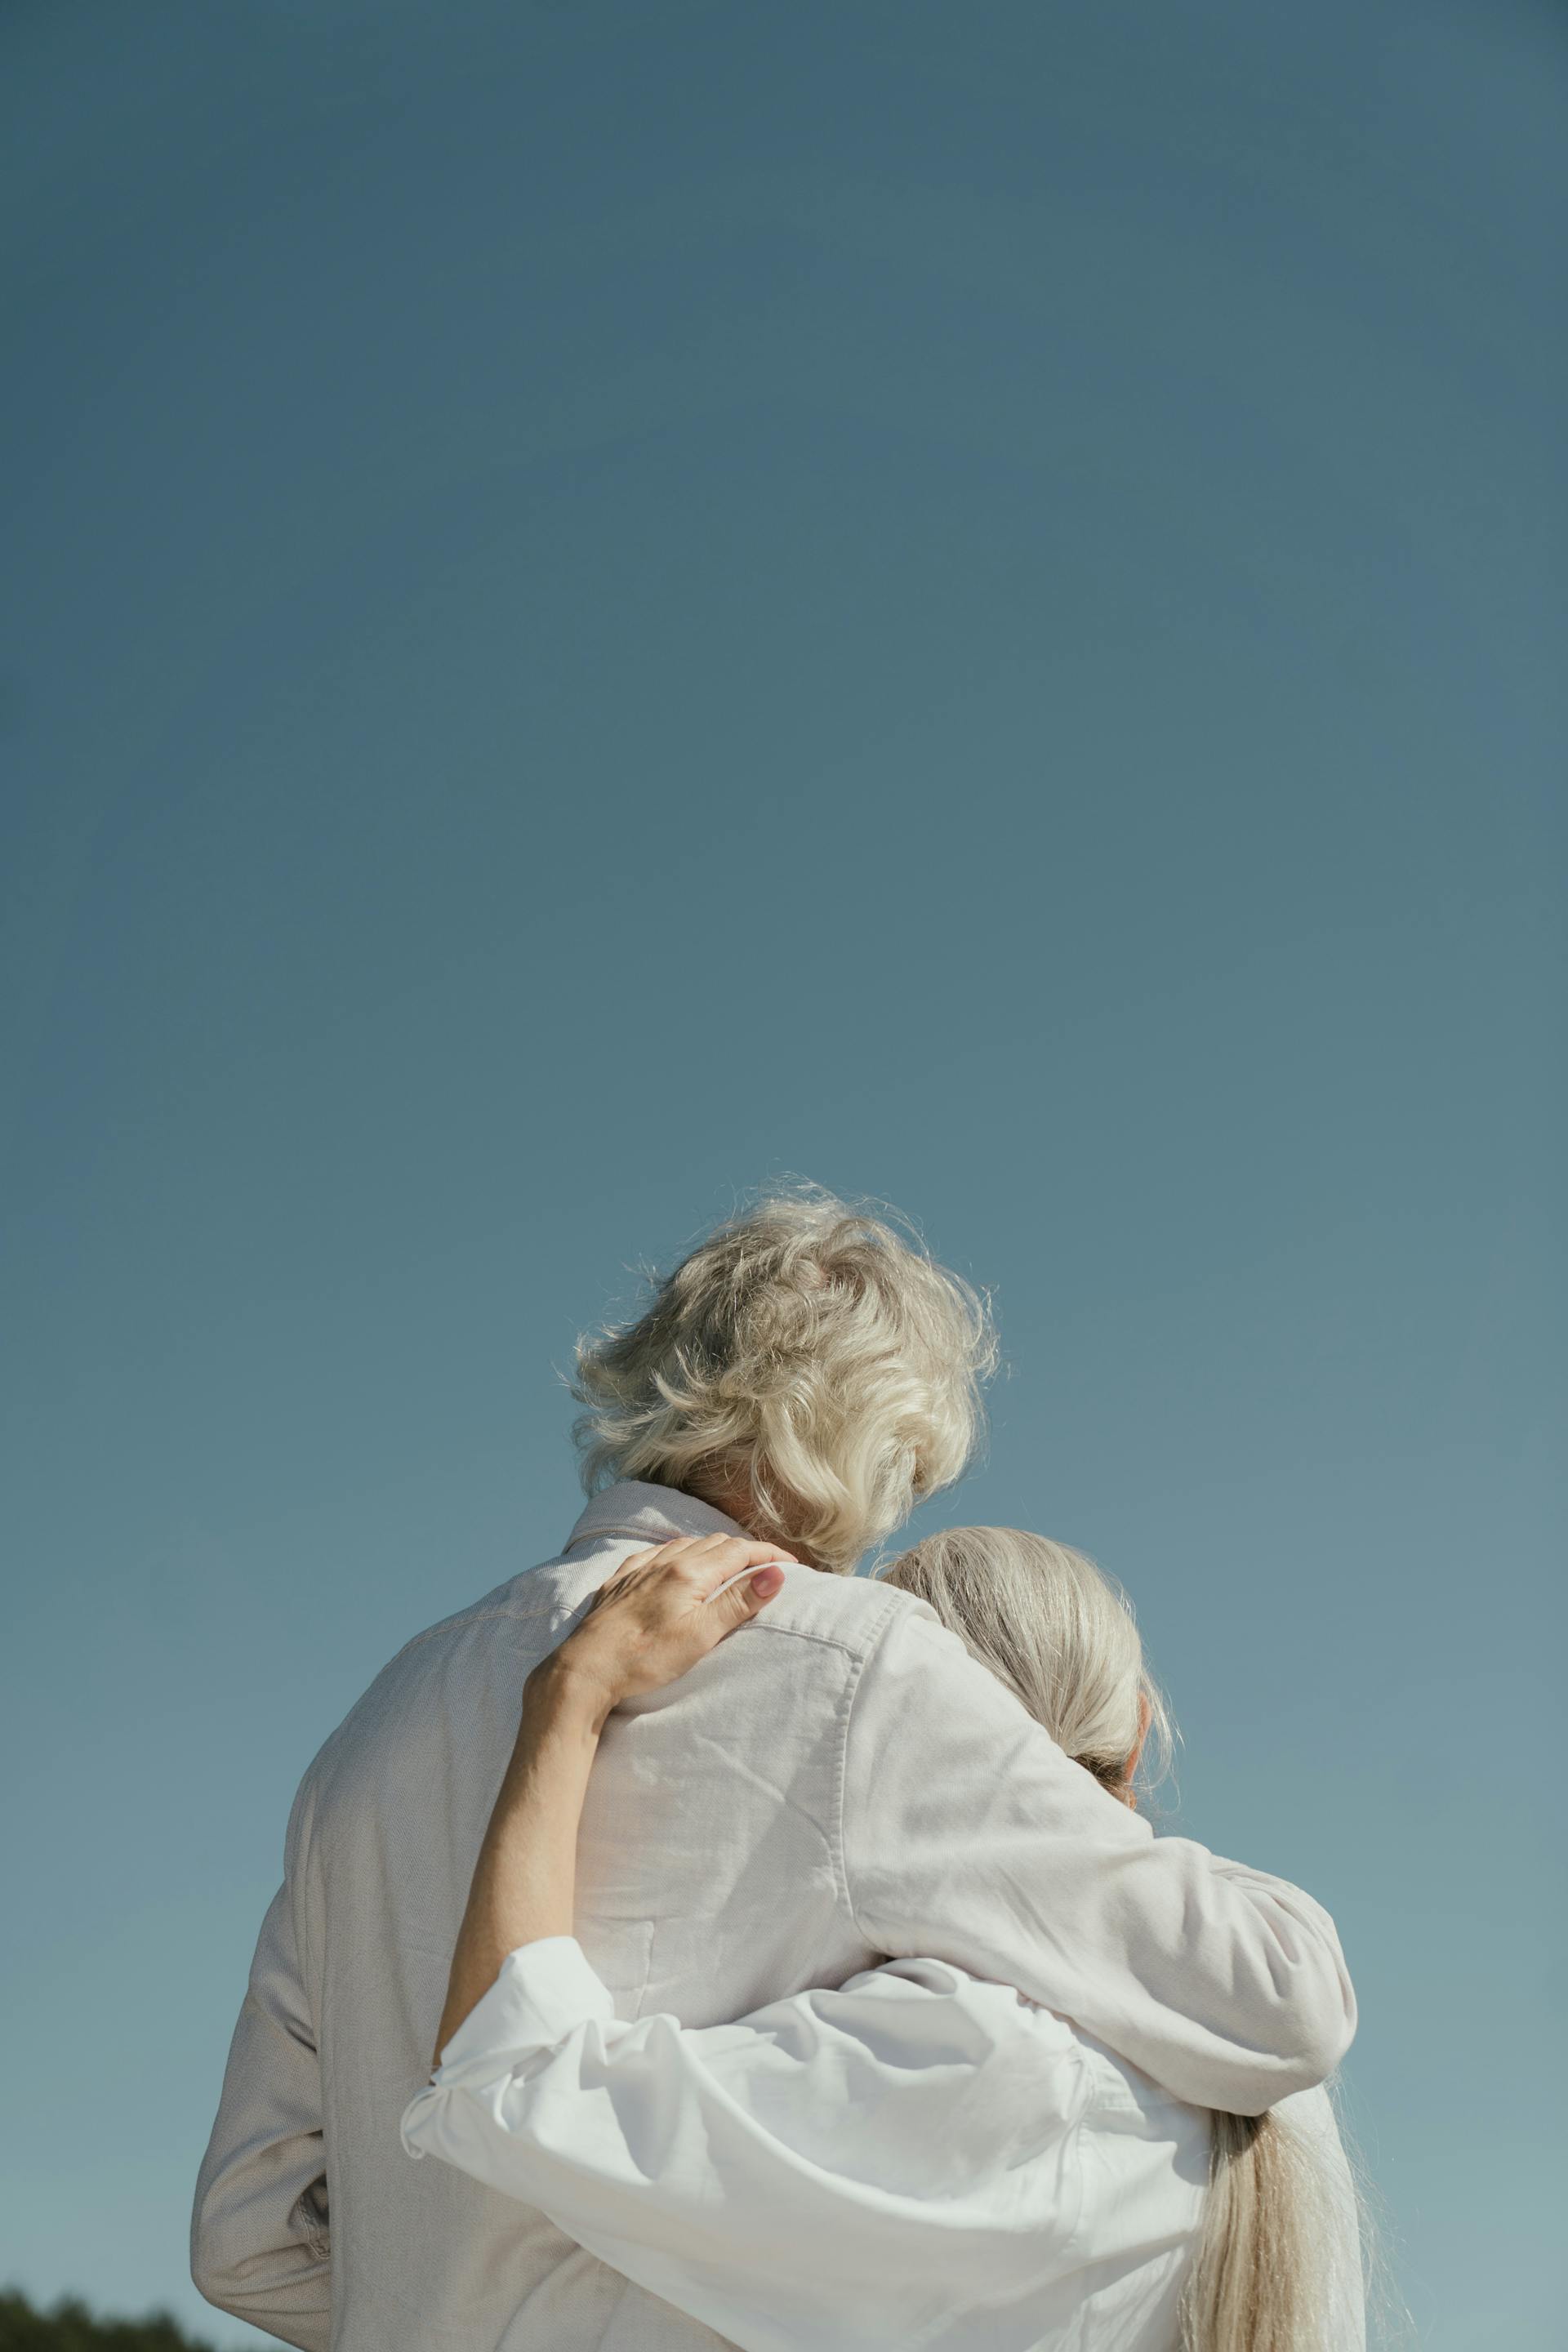 An elderly couple hugging | Source: Pexels